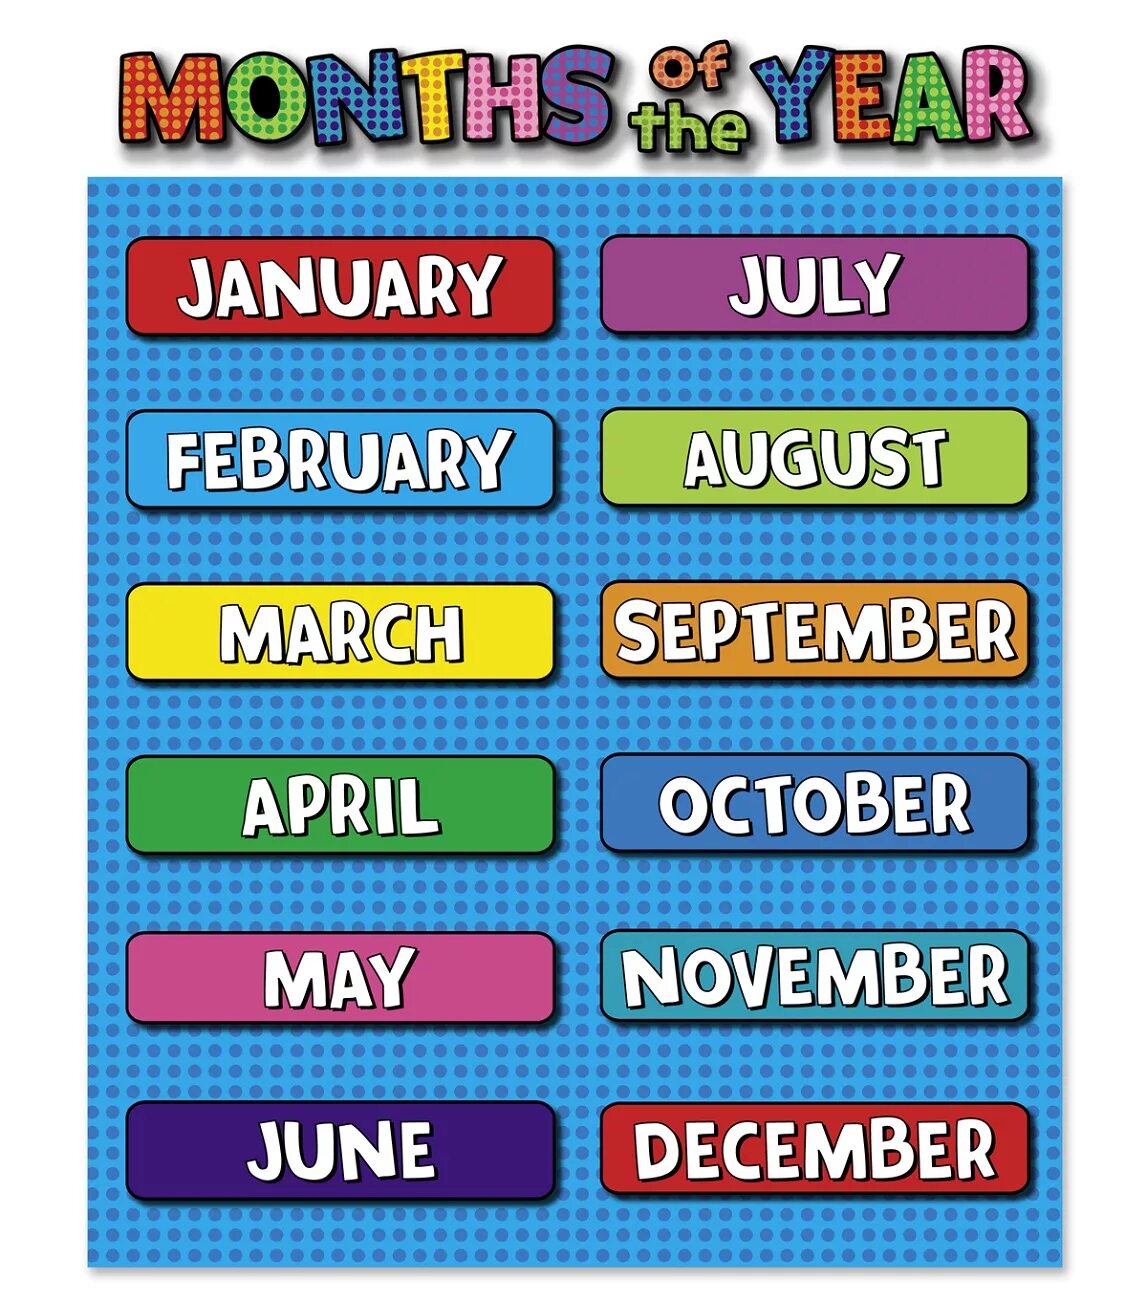 Week month. Months of the year. Месяца на английском. Месяца по английскому по порядку. Months in English.